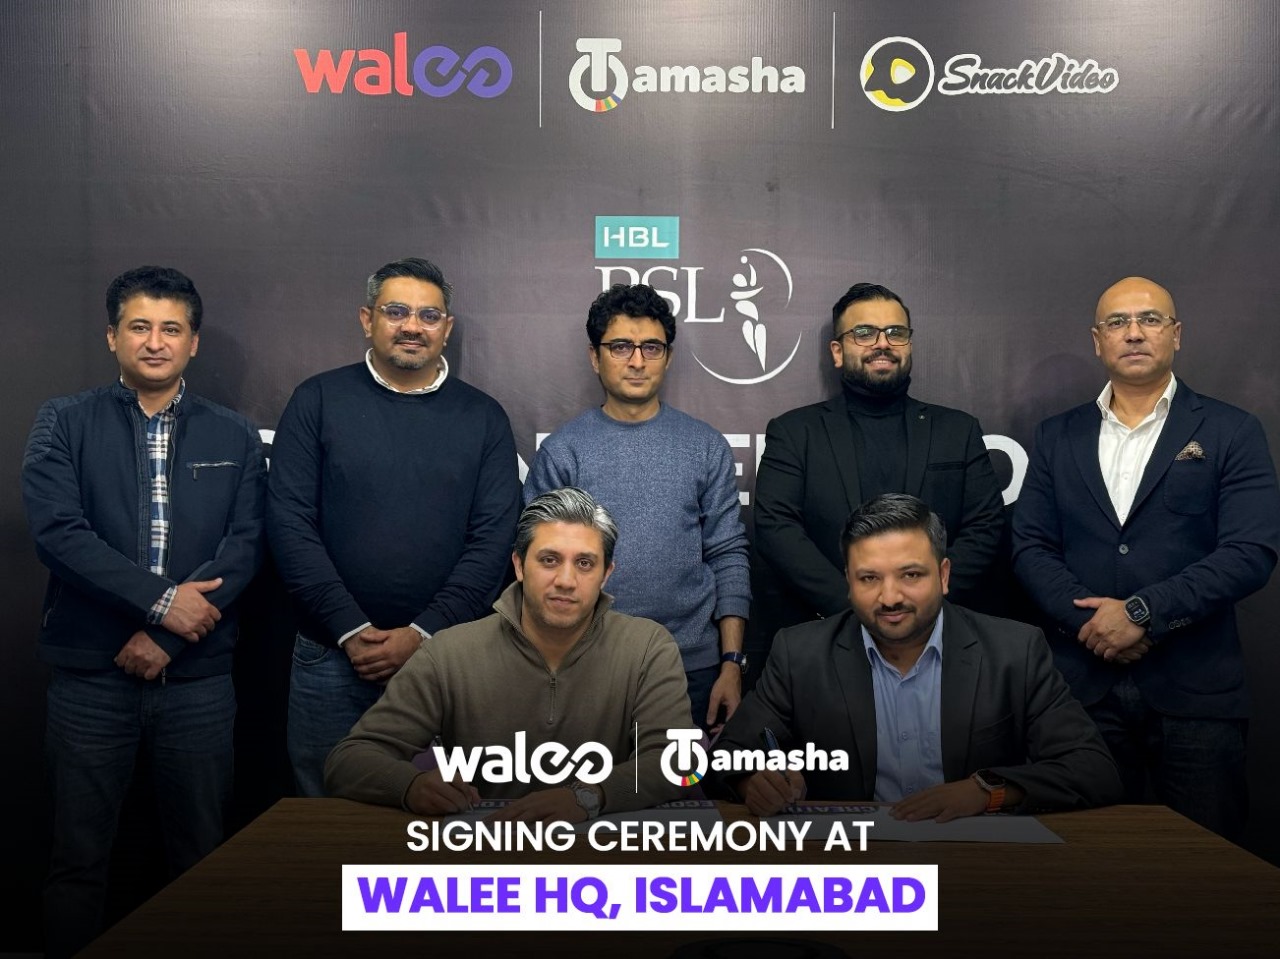 Tamasha Brings HD Live Streaming of HBL-PSL 9 to Pakistani Cricket Fans